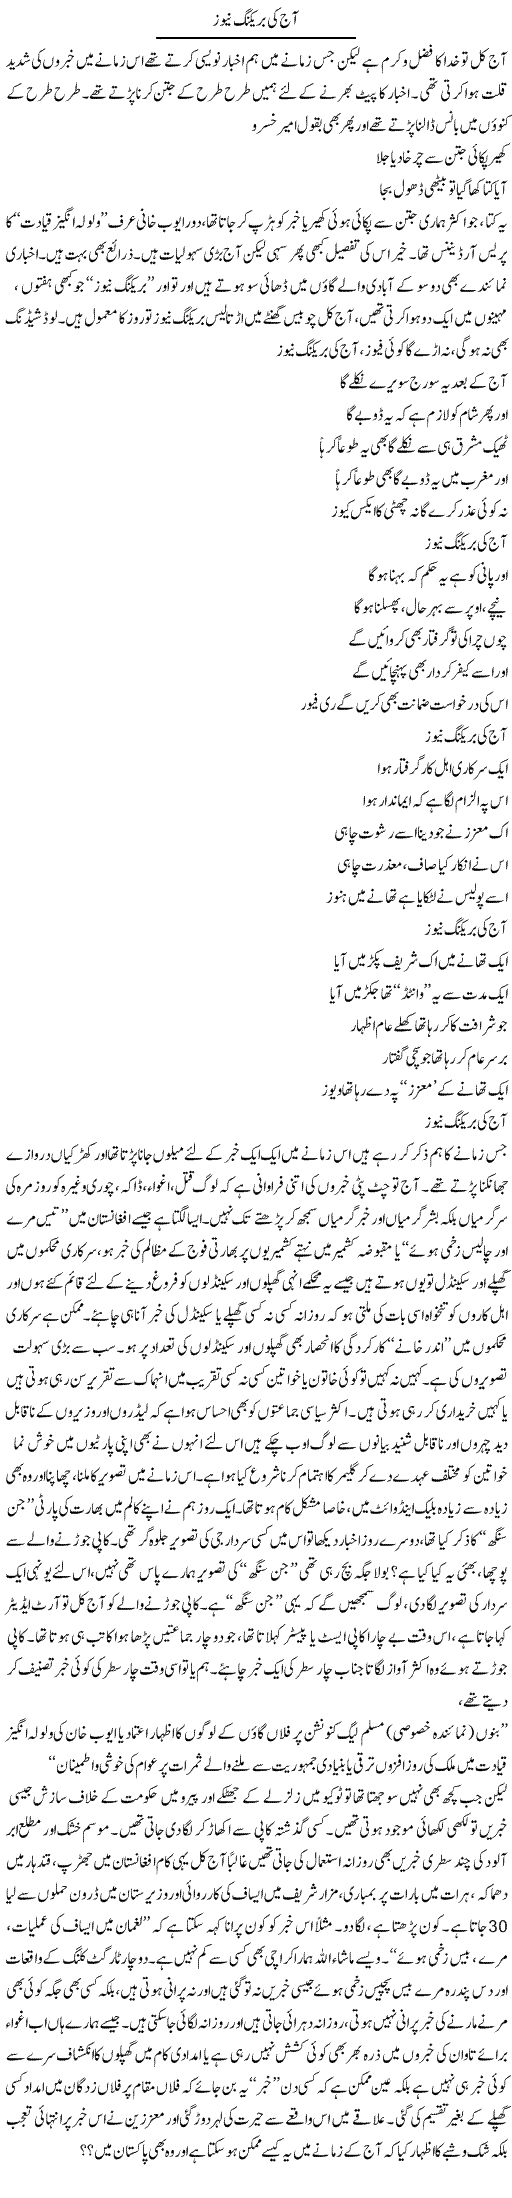 Breaking News Express Column Saadullah Barq 3 October 2010